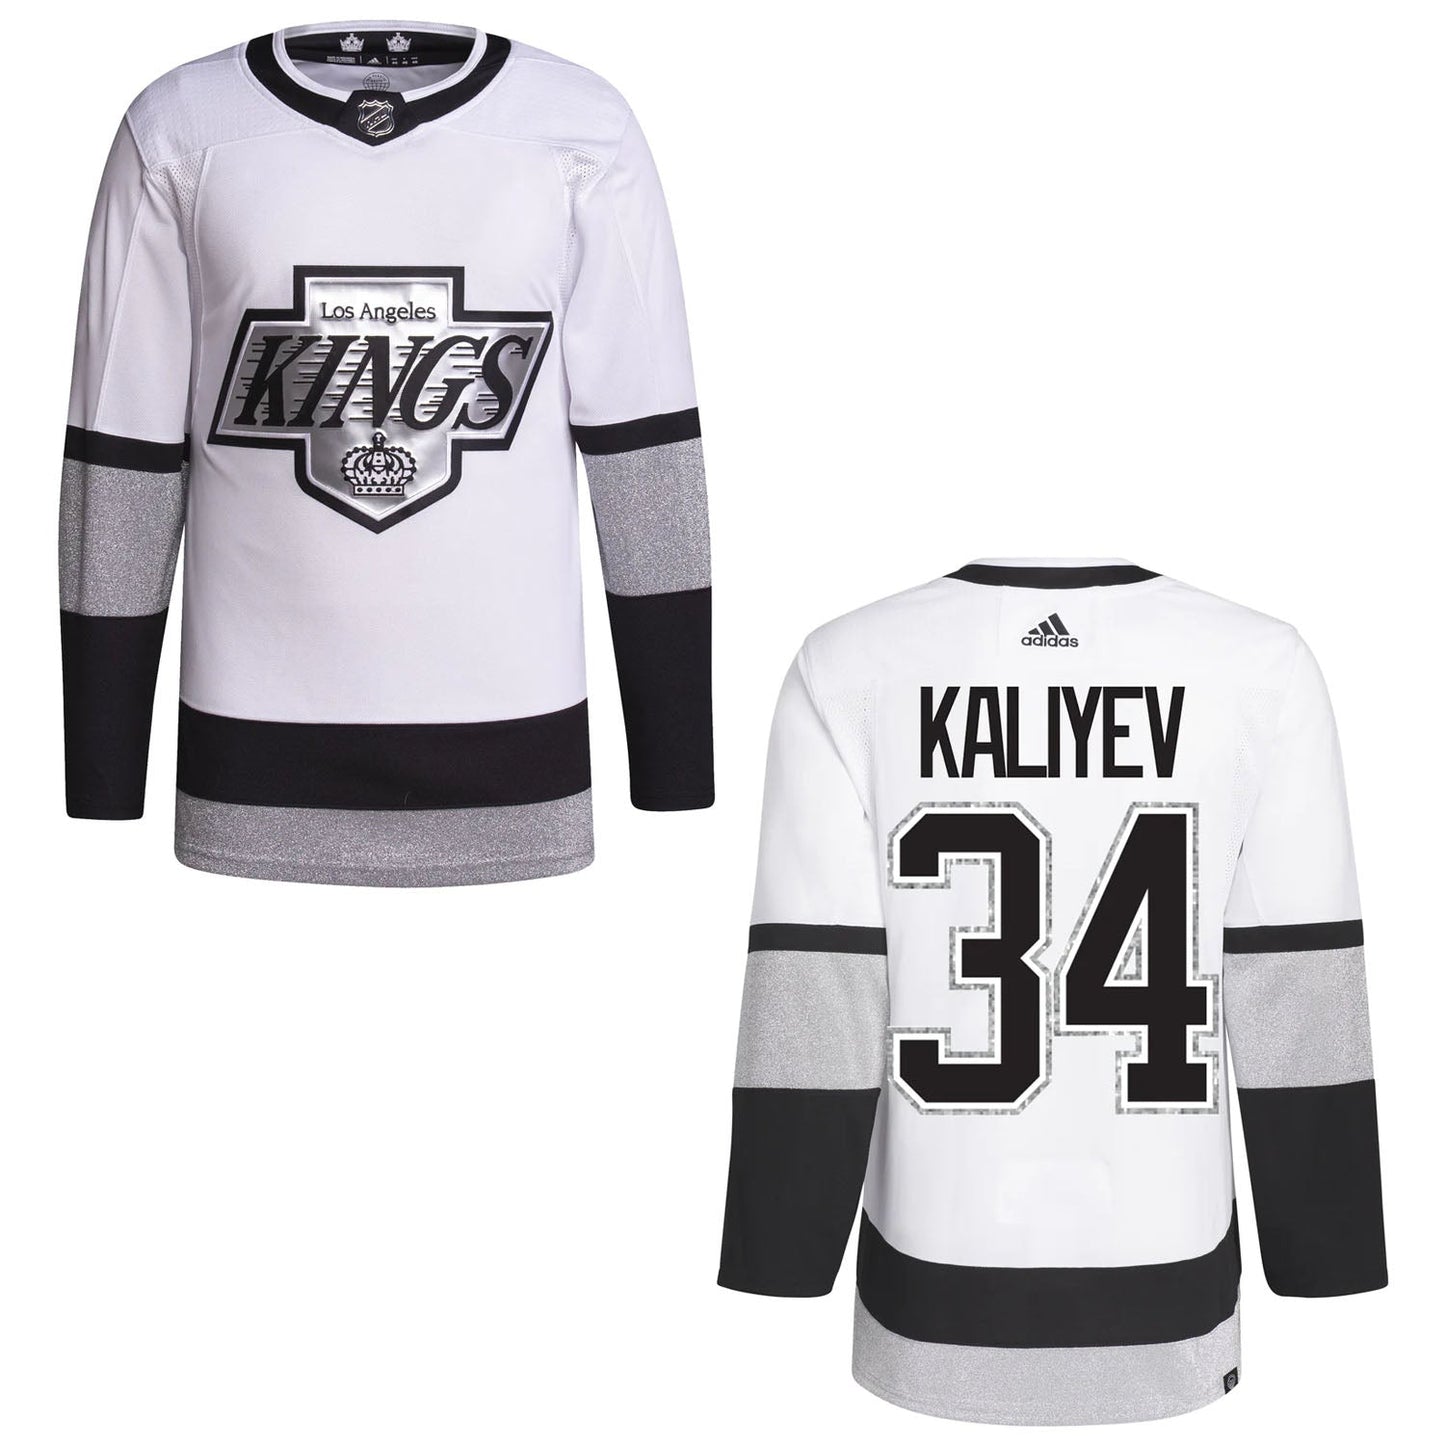 NHL Arthur Kaliyev La Kings 34 Jersey